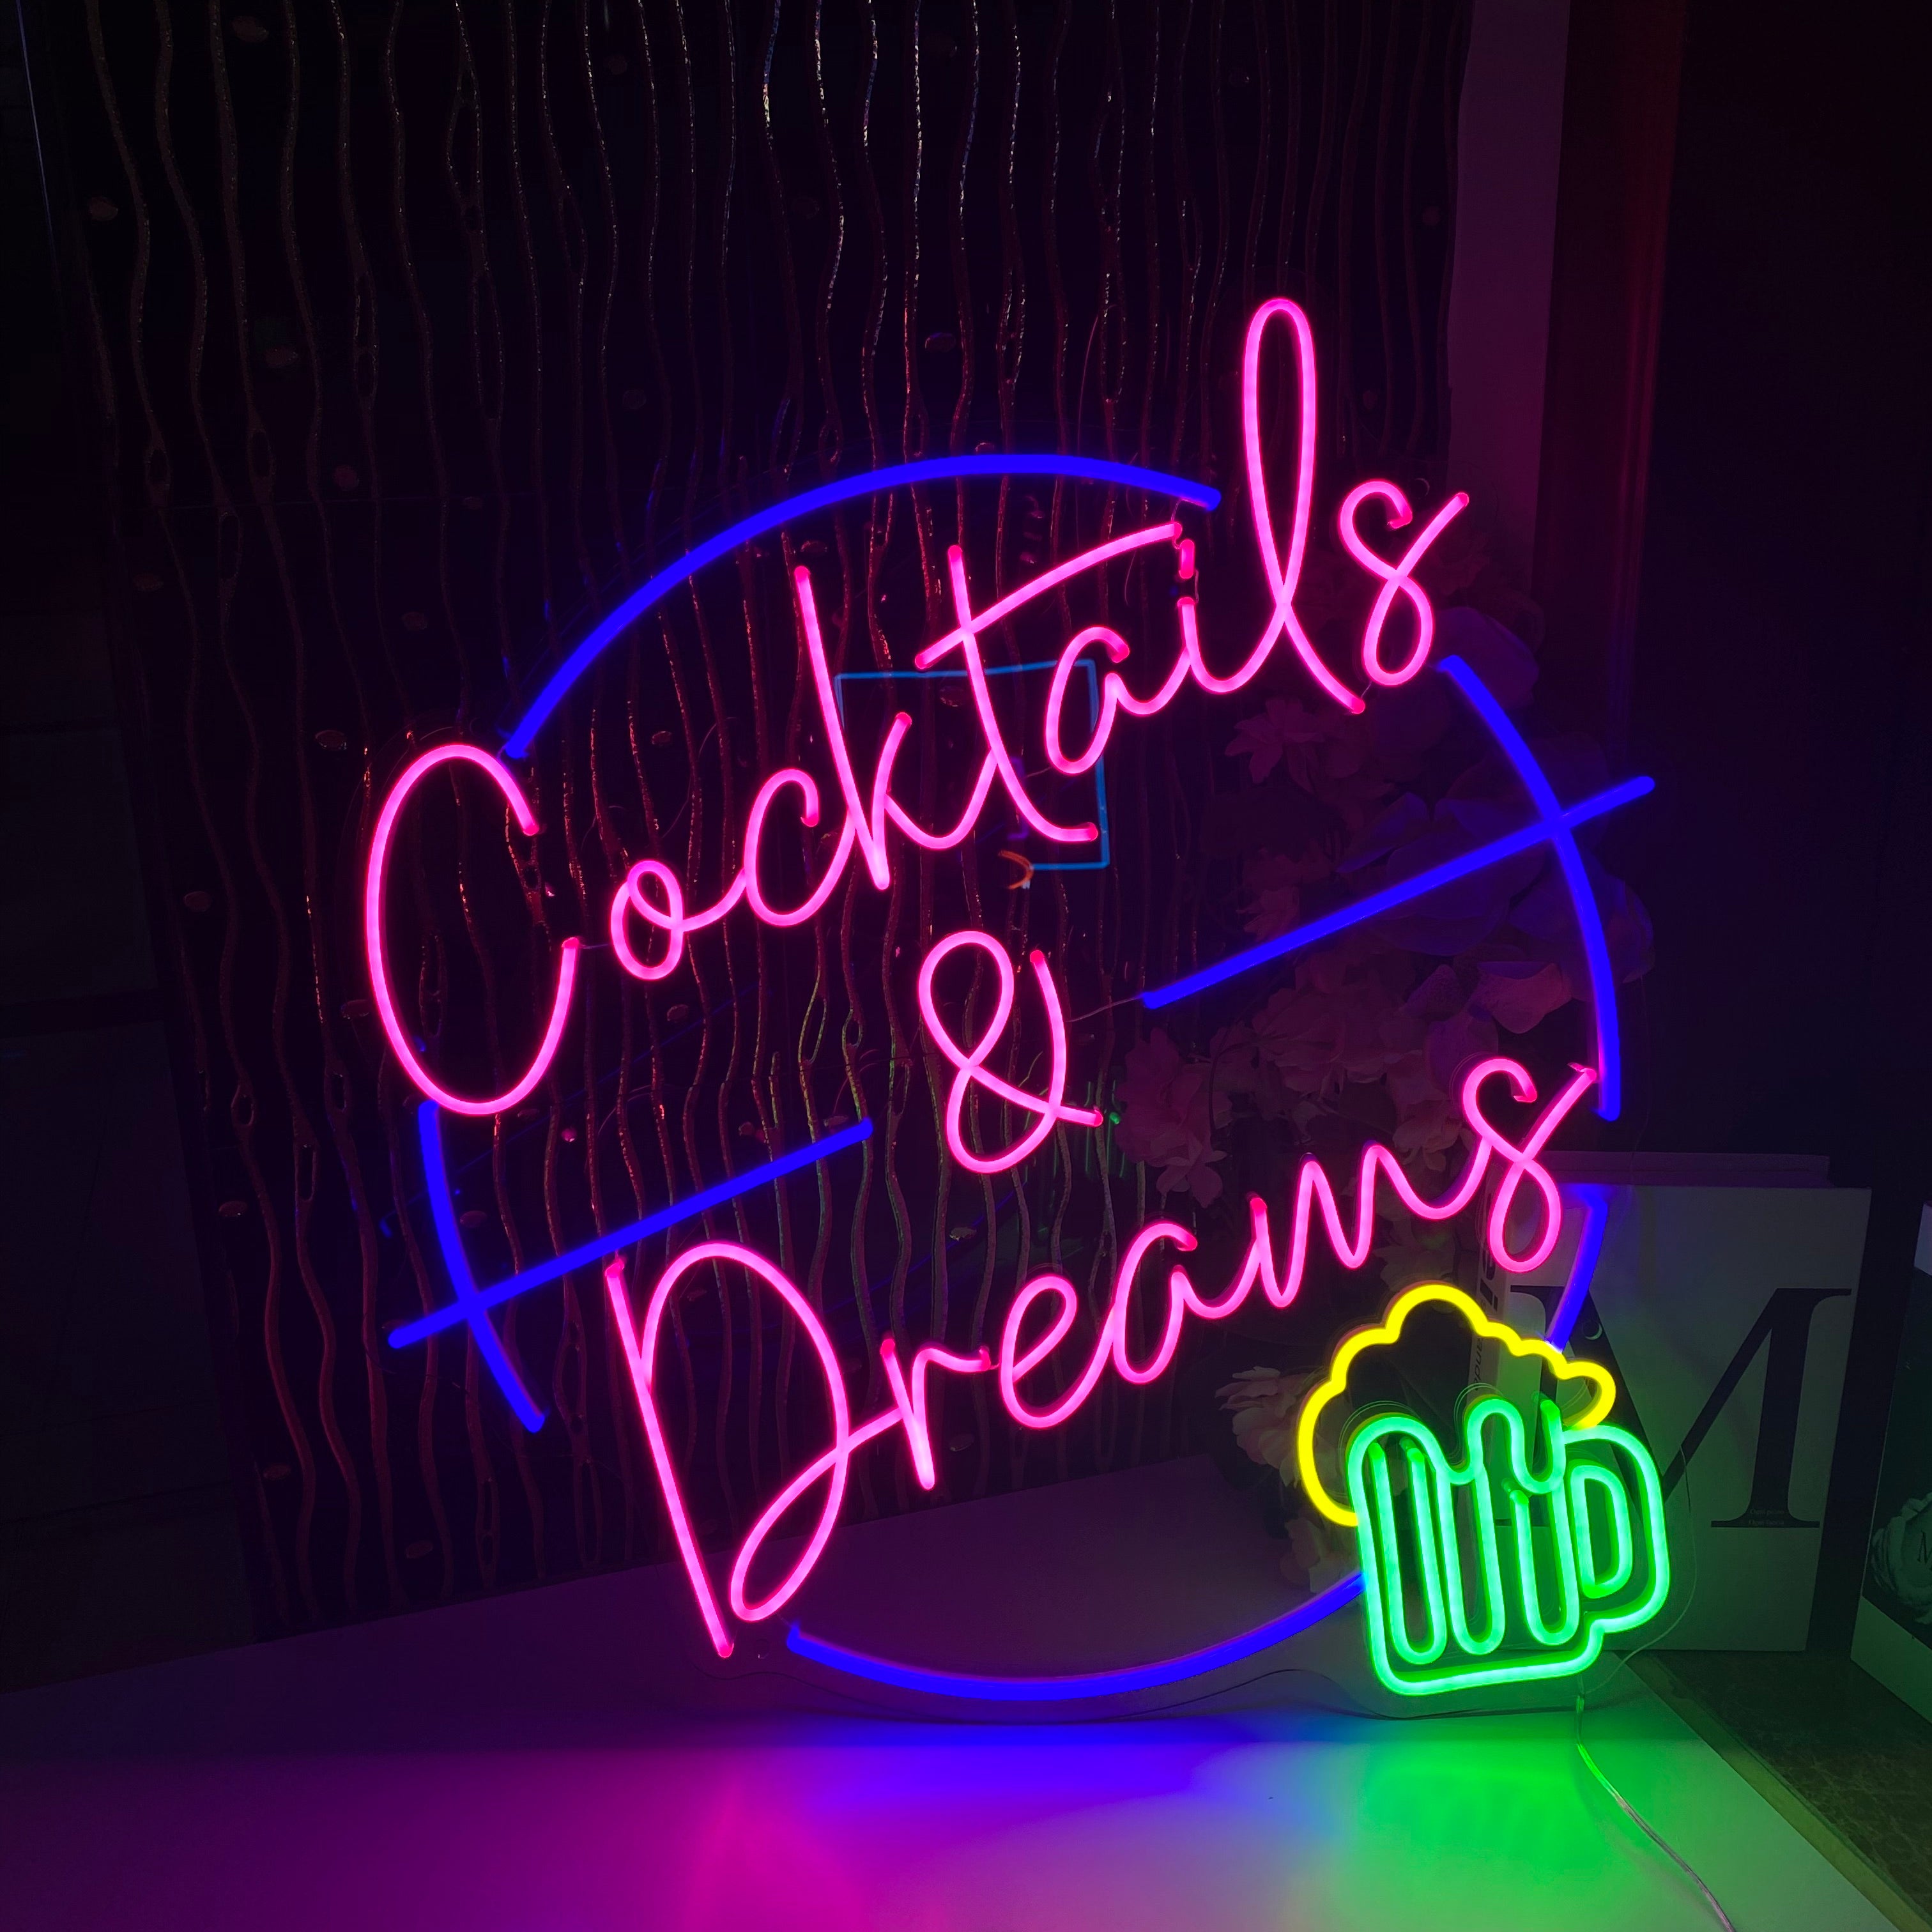 Cocktails & Dreams neon art